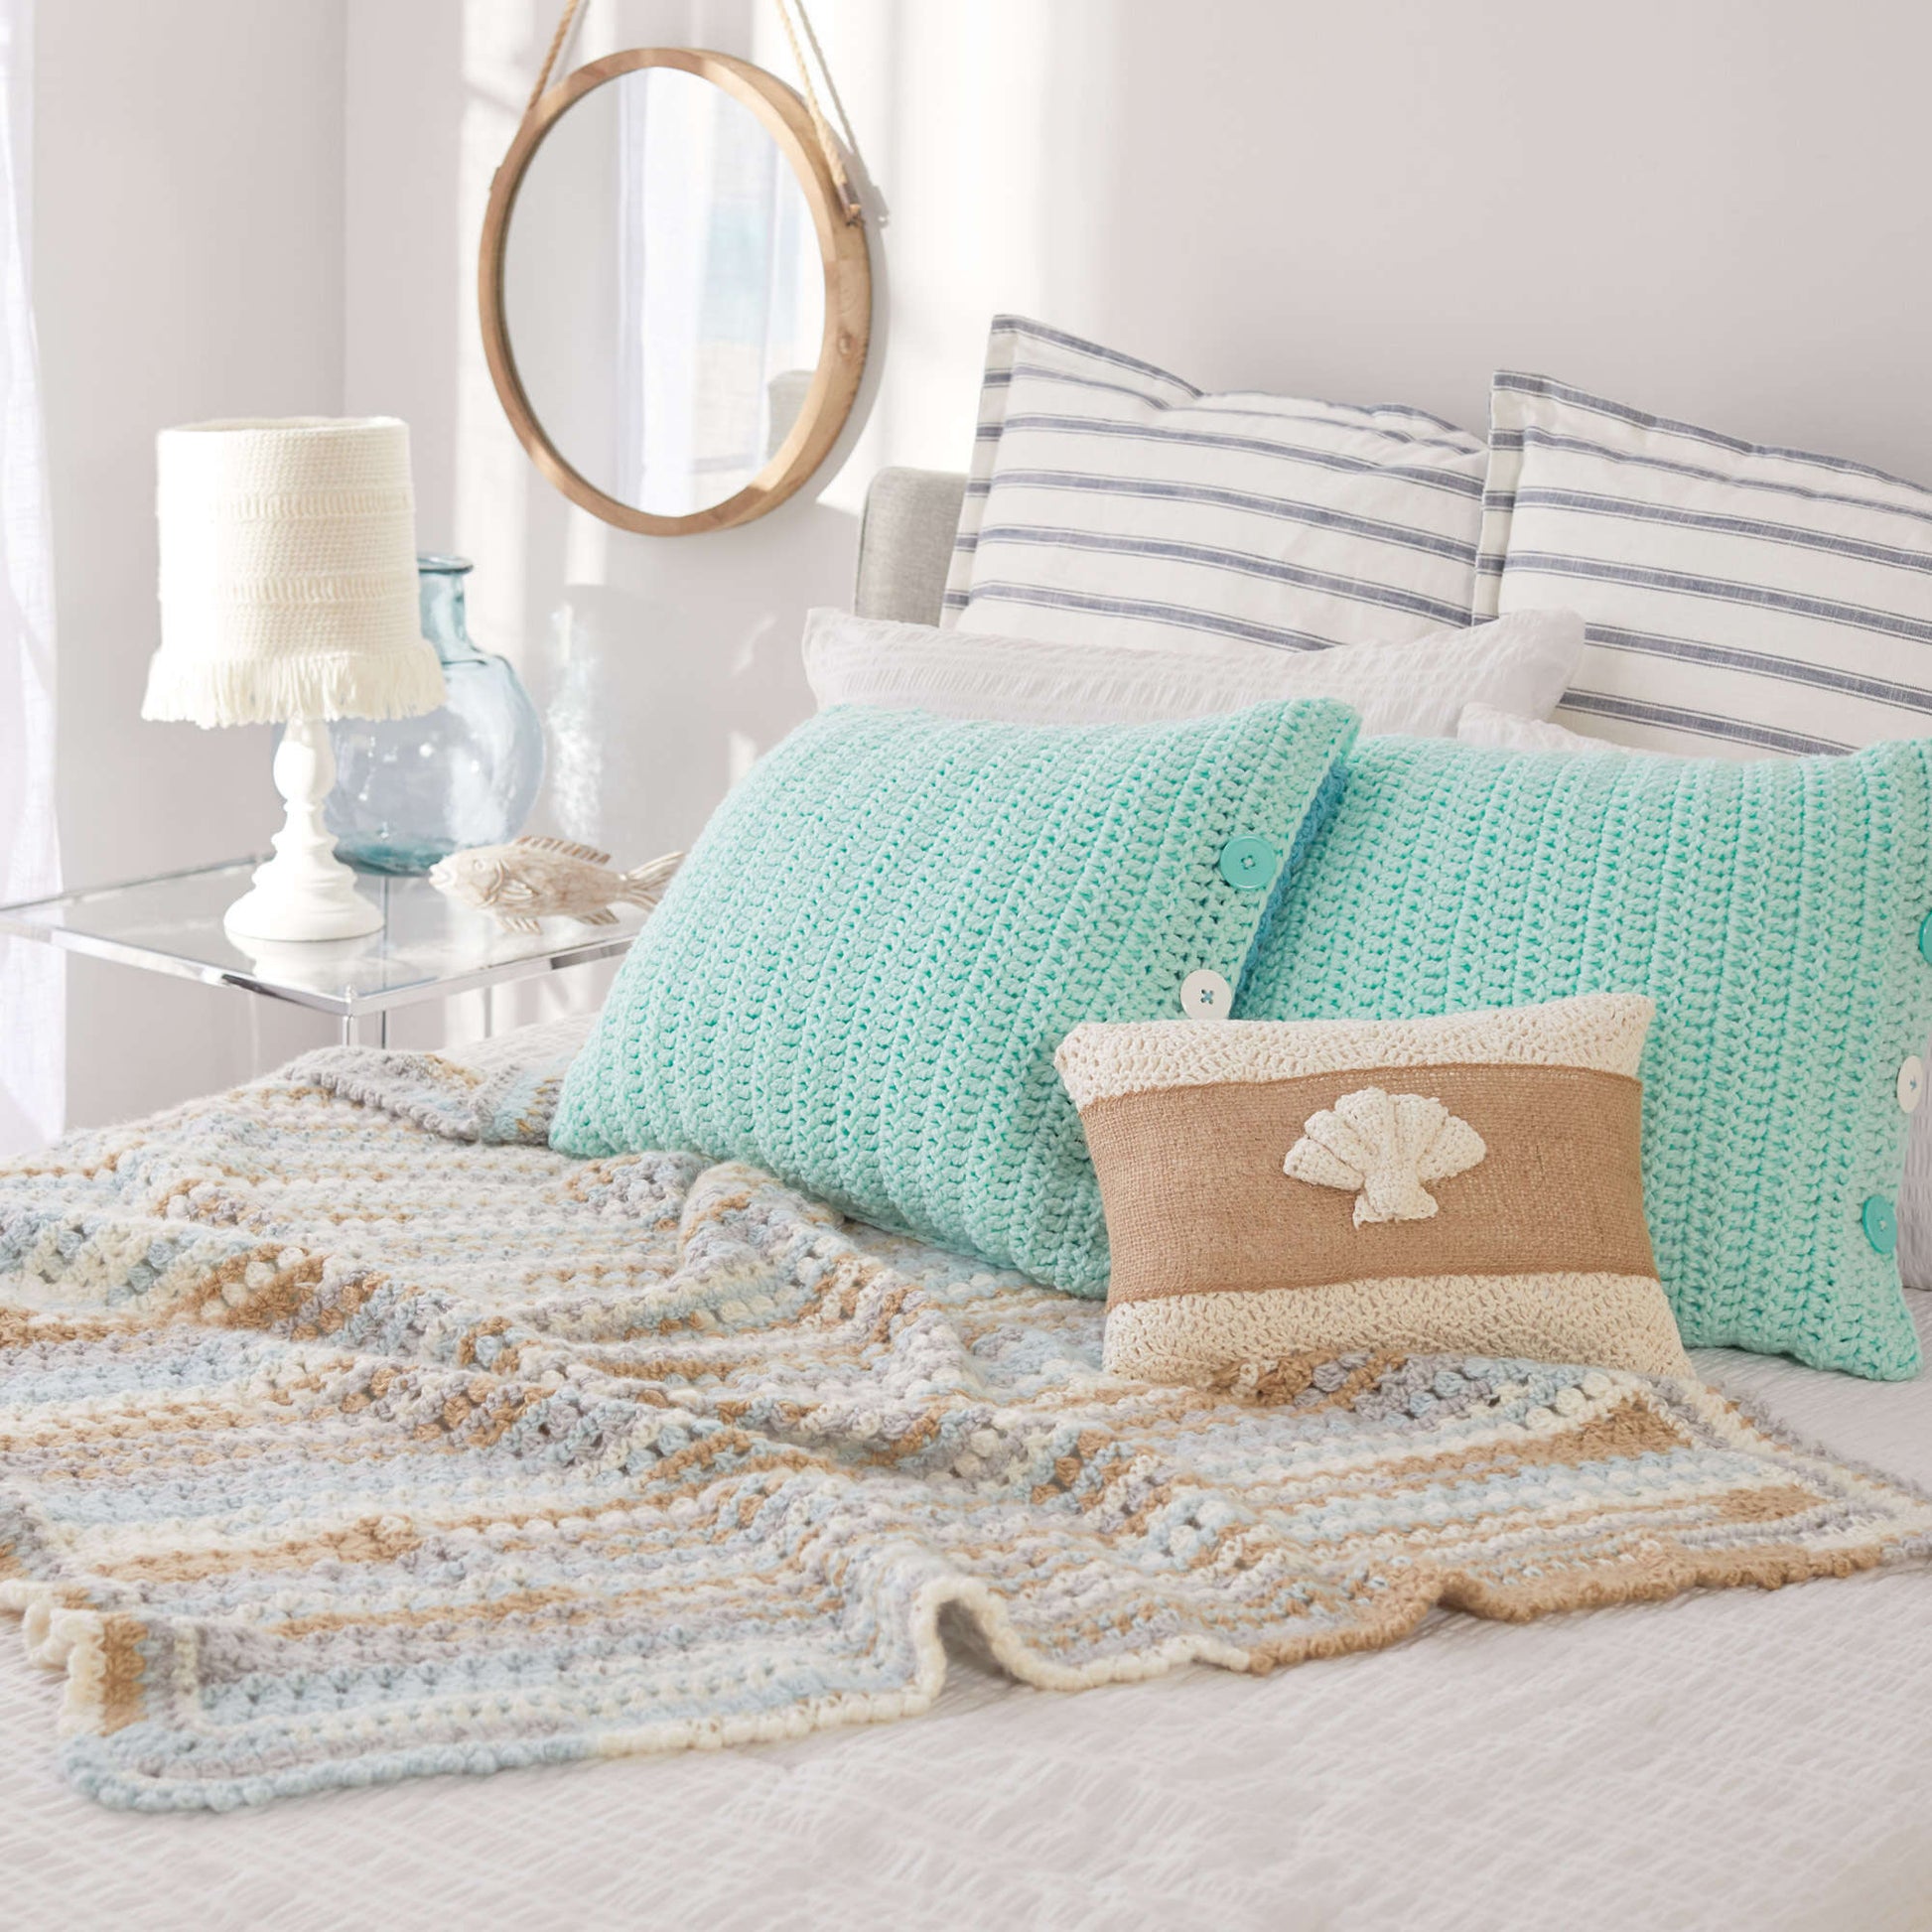 Free Red Heart Crochet Ocean Front Bed Pillows Pattern